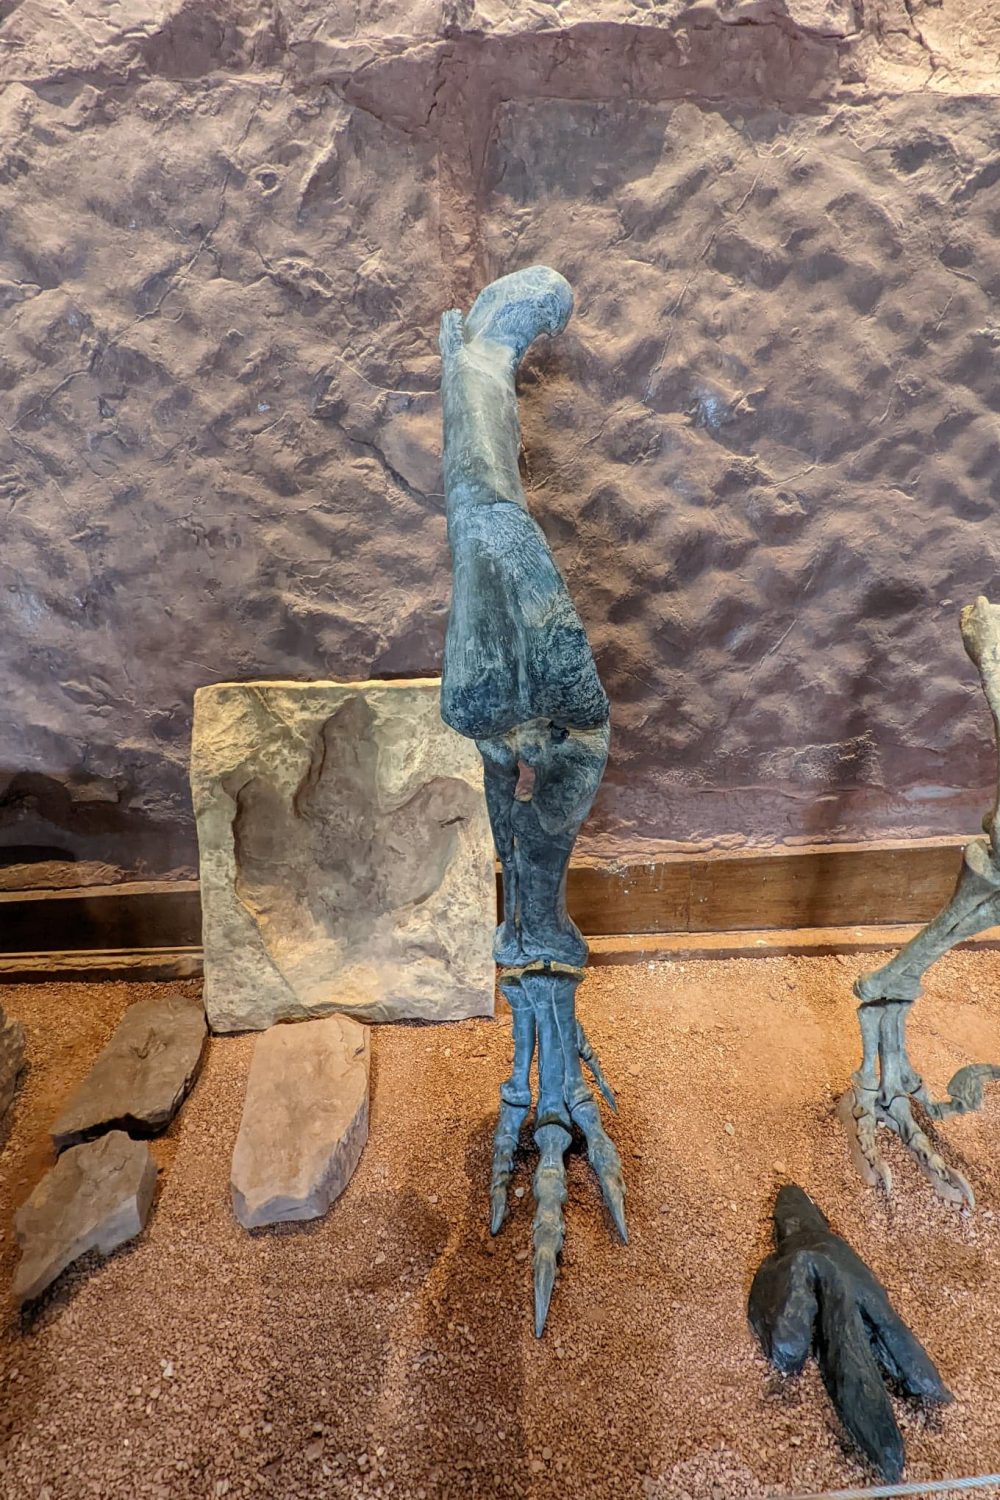 Dinosaur bones at the St. Goerge Dinosaur Discovery Site